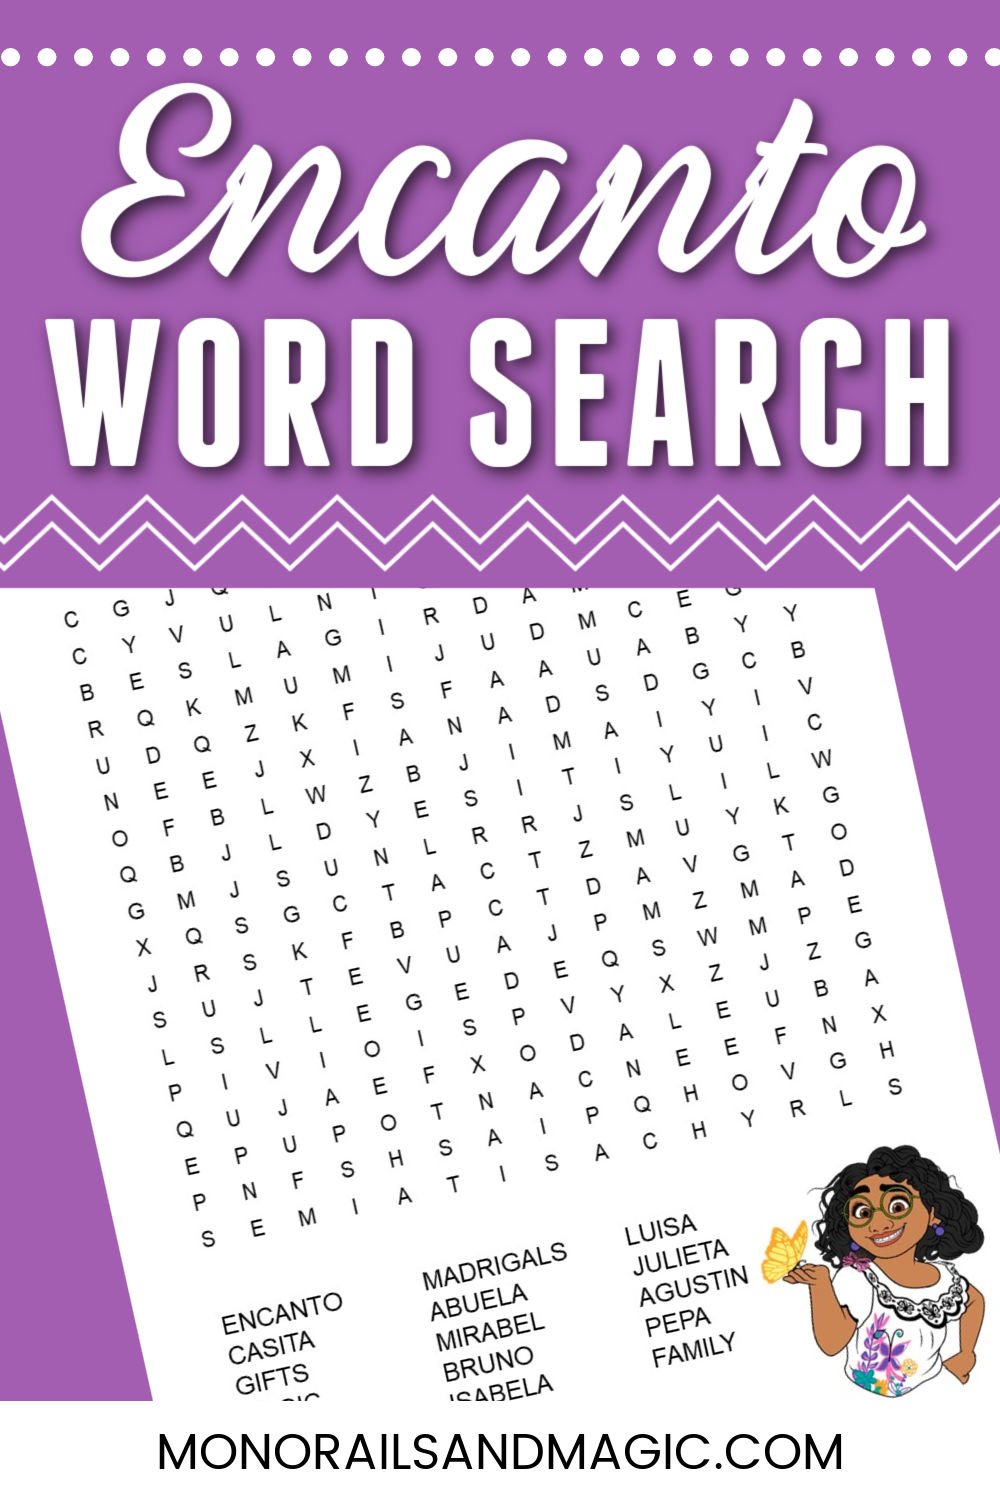 Free printable Encanto word search for kids